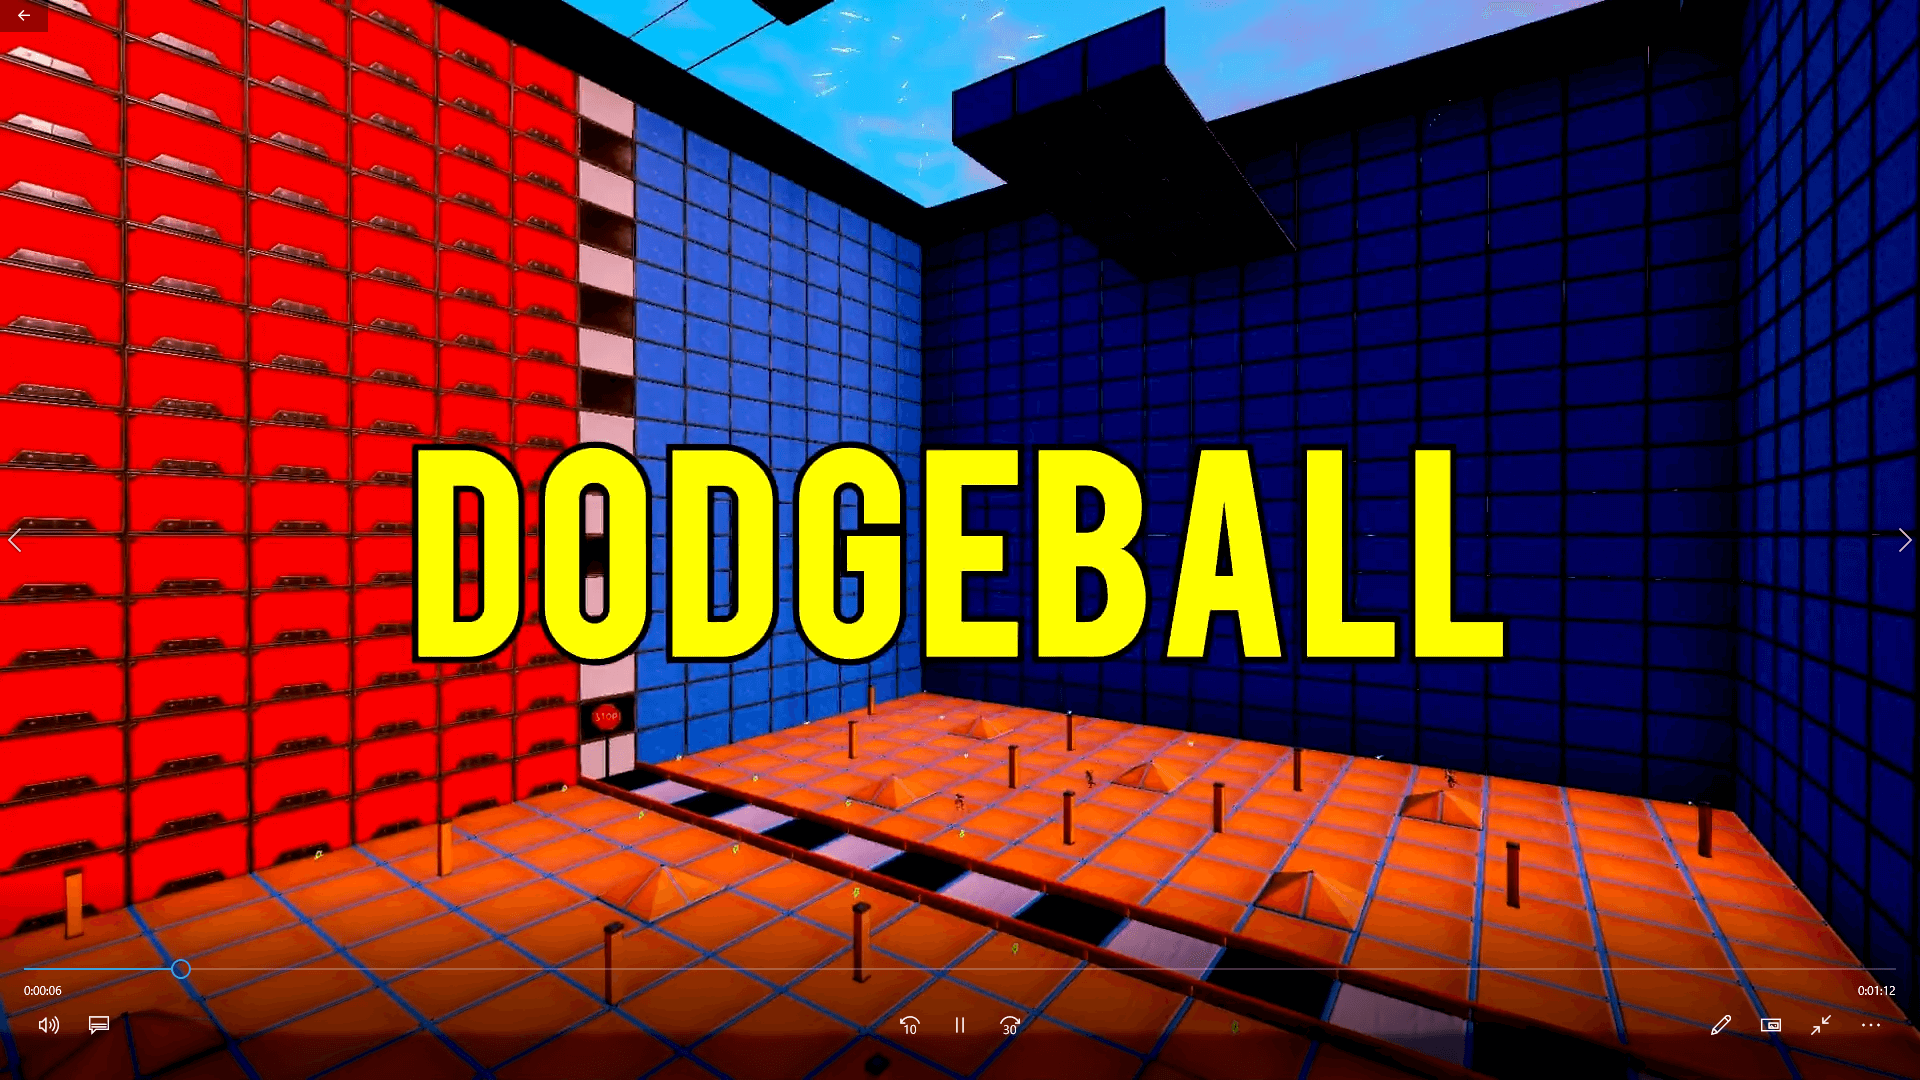 DODGEBALL! BY BOSS_YMS